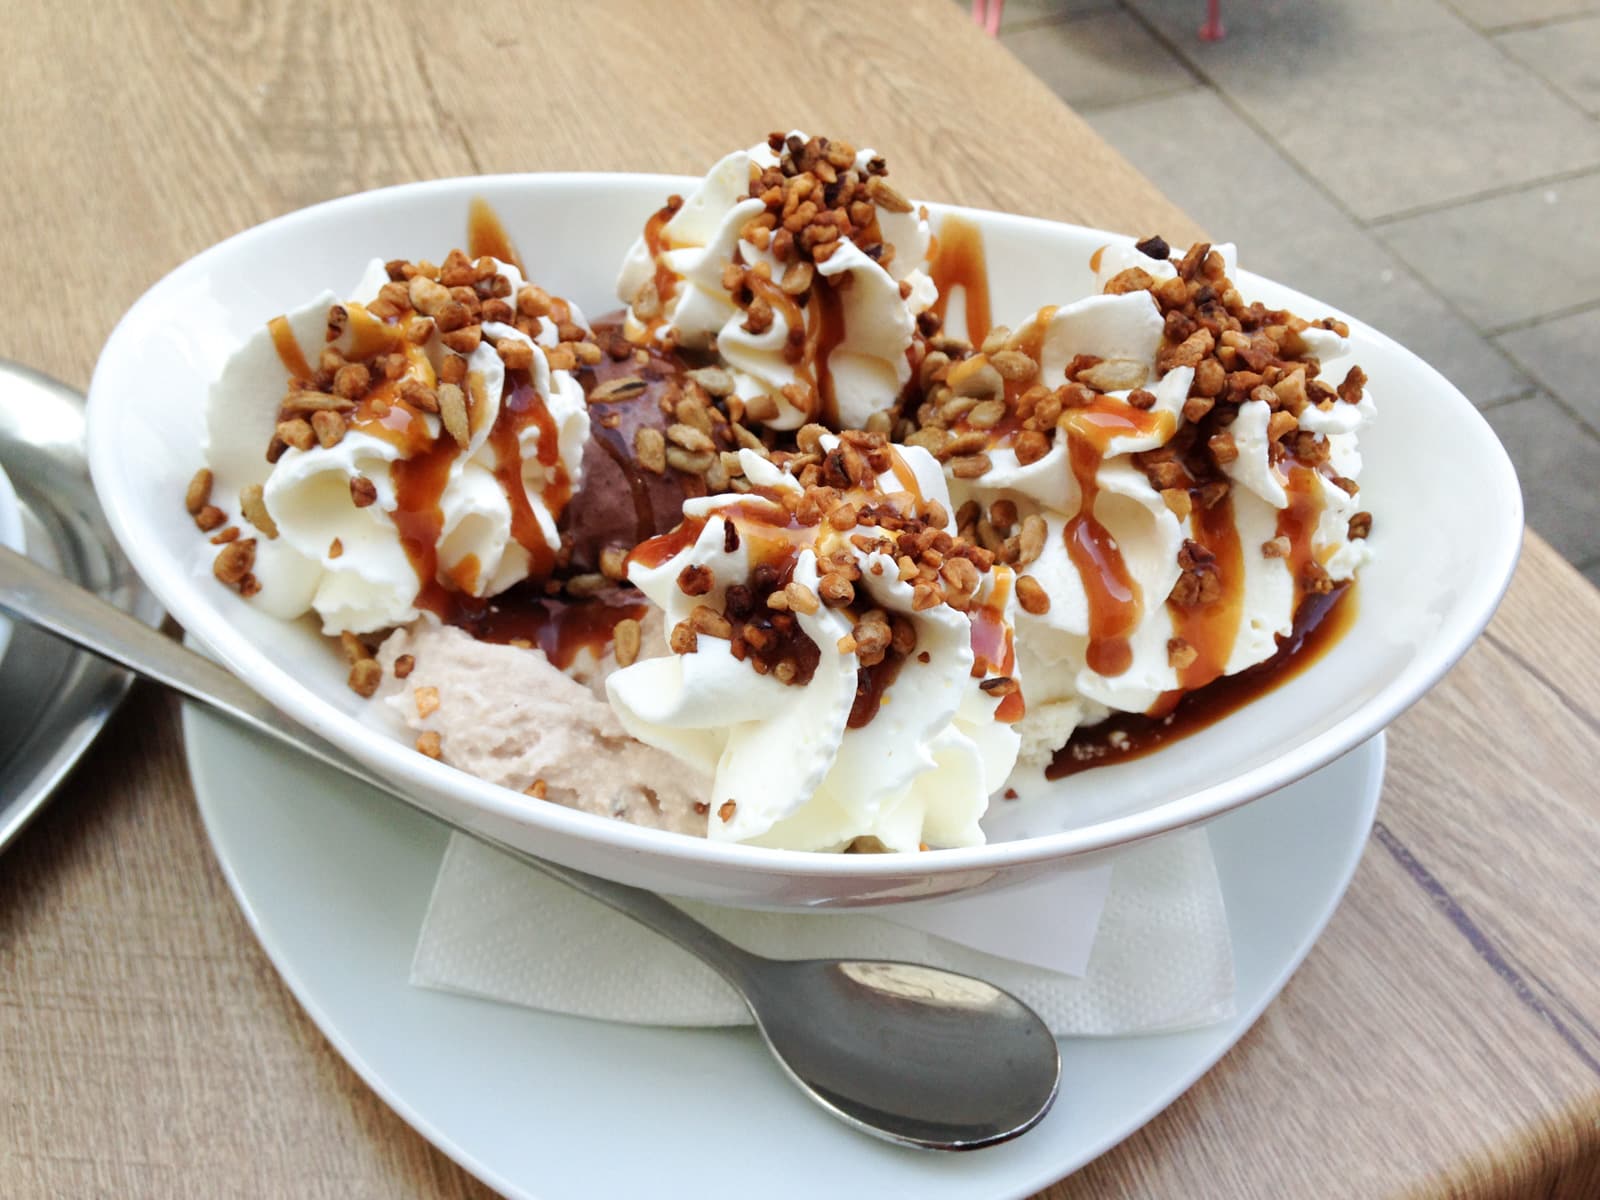 Ice cream sundae in Germany